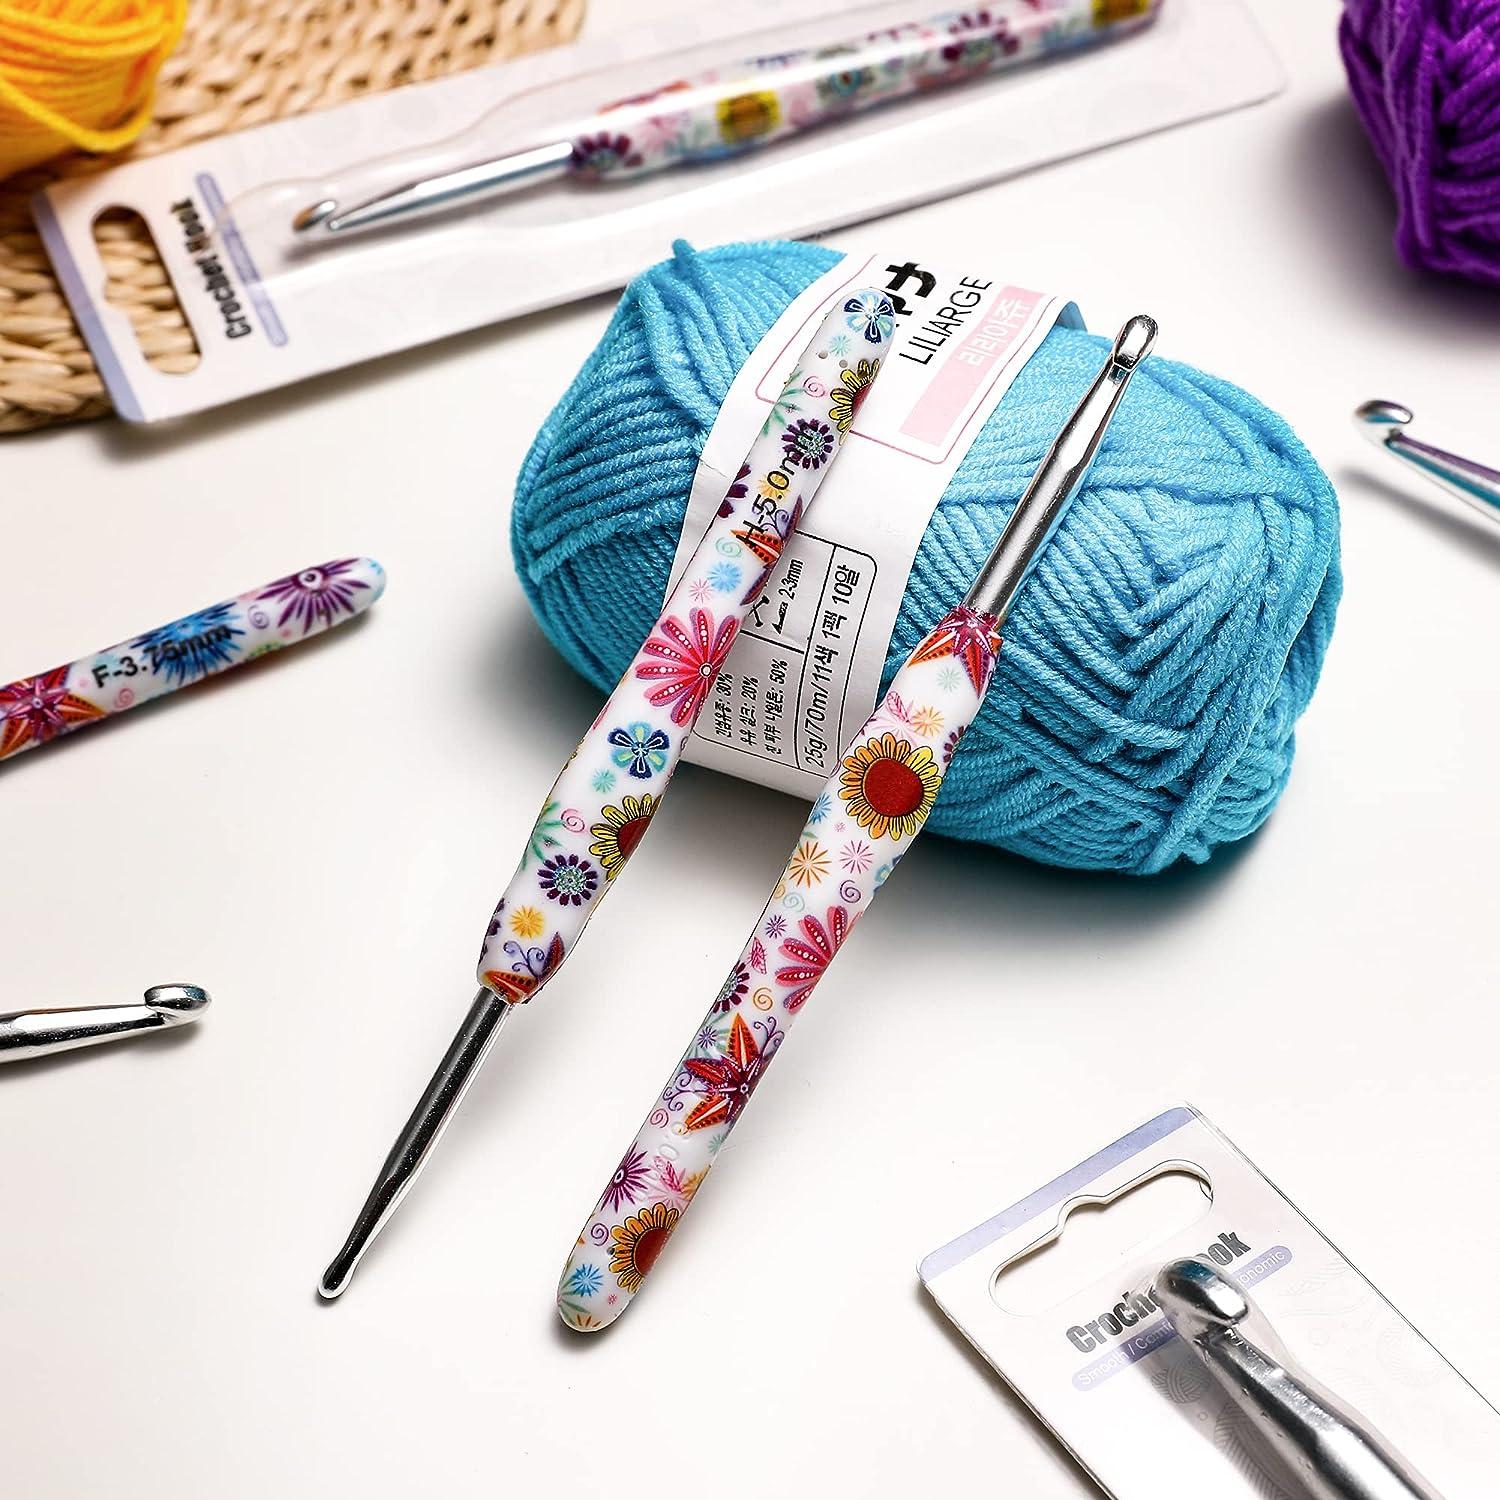 Prym Ergonomic soft grip comfy crochet hooks, 3mm -15mm, Choose size or set